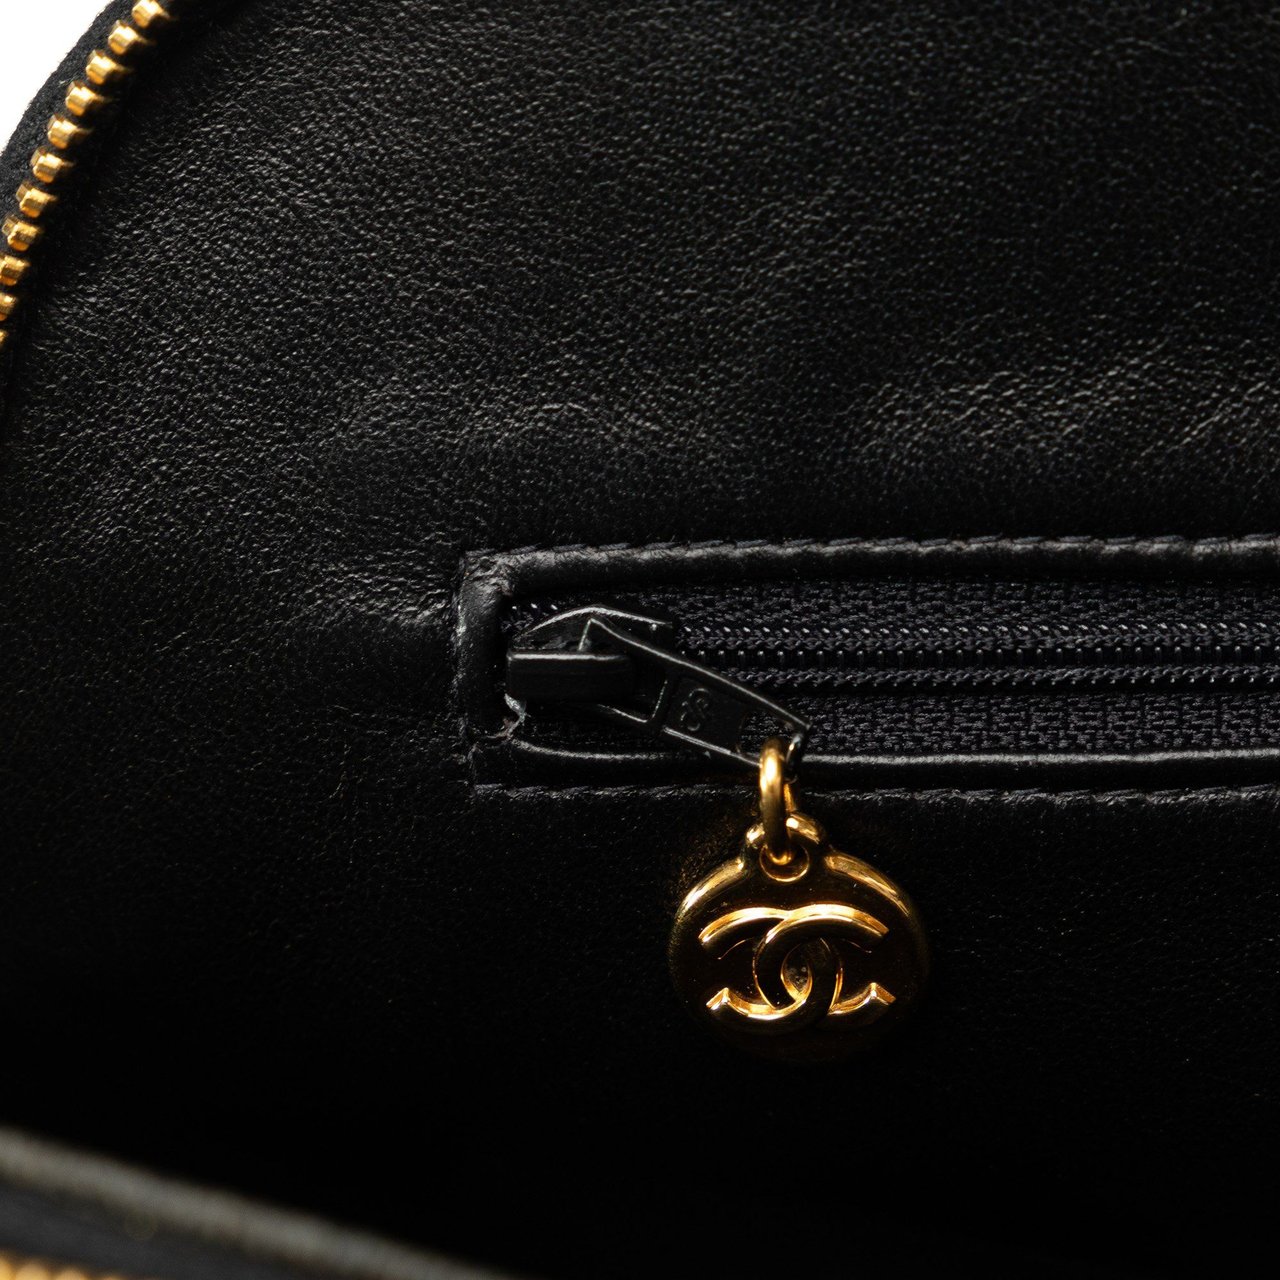 Chanel Quilted Lambskin Dome Shoulder Bag Zwart